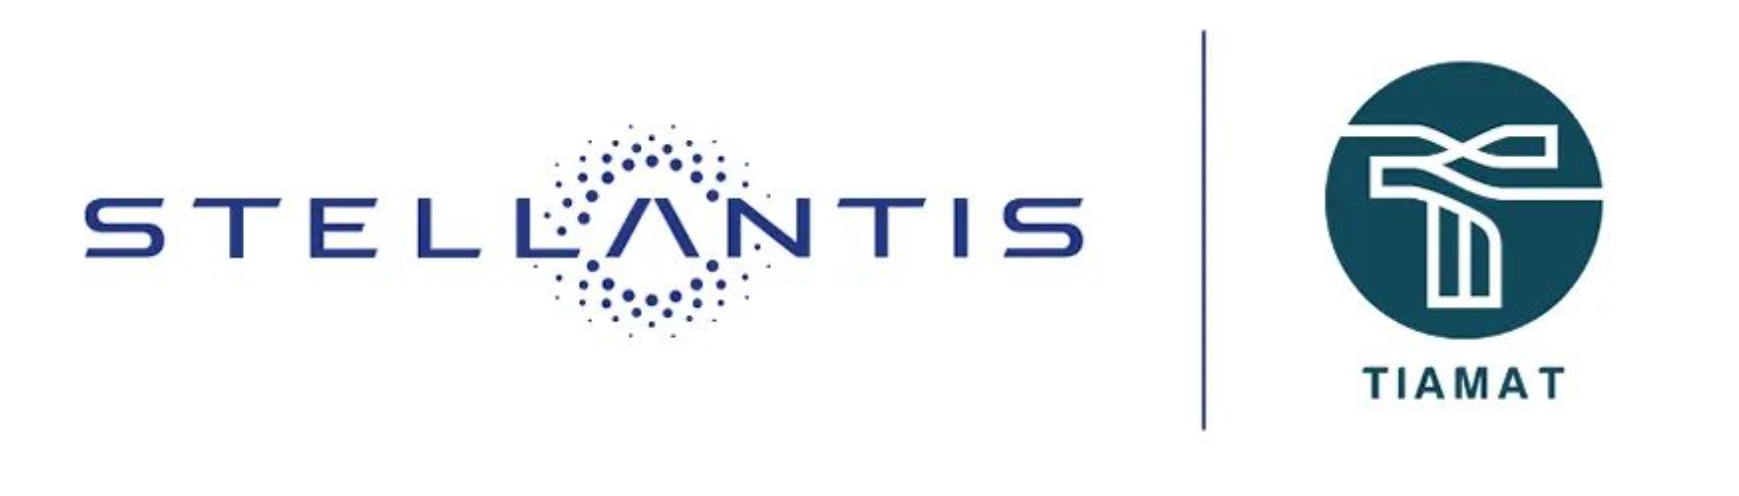 Stellantis Ventures投资Tiamat及其经济型钠离子电池技术